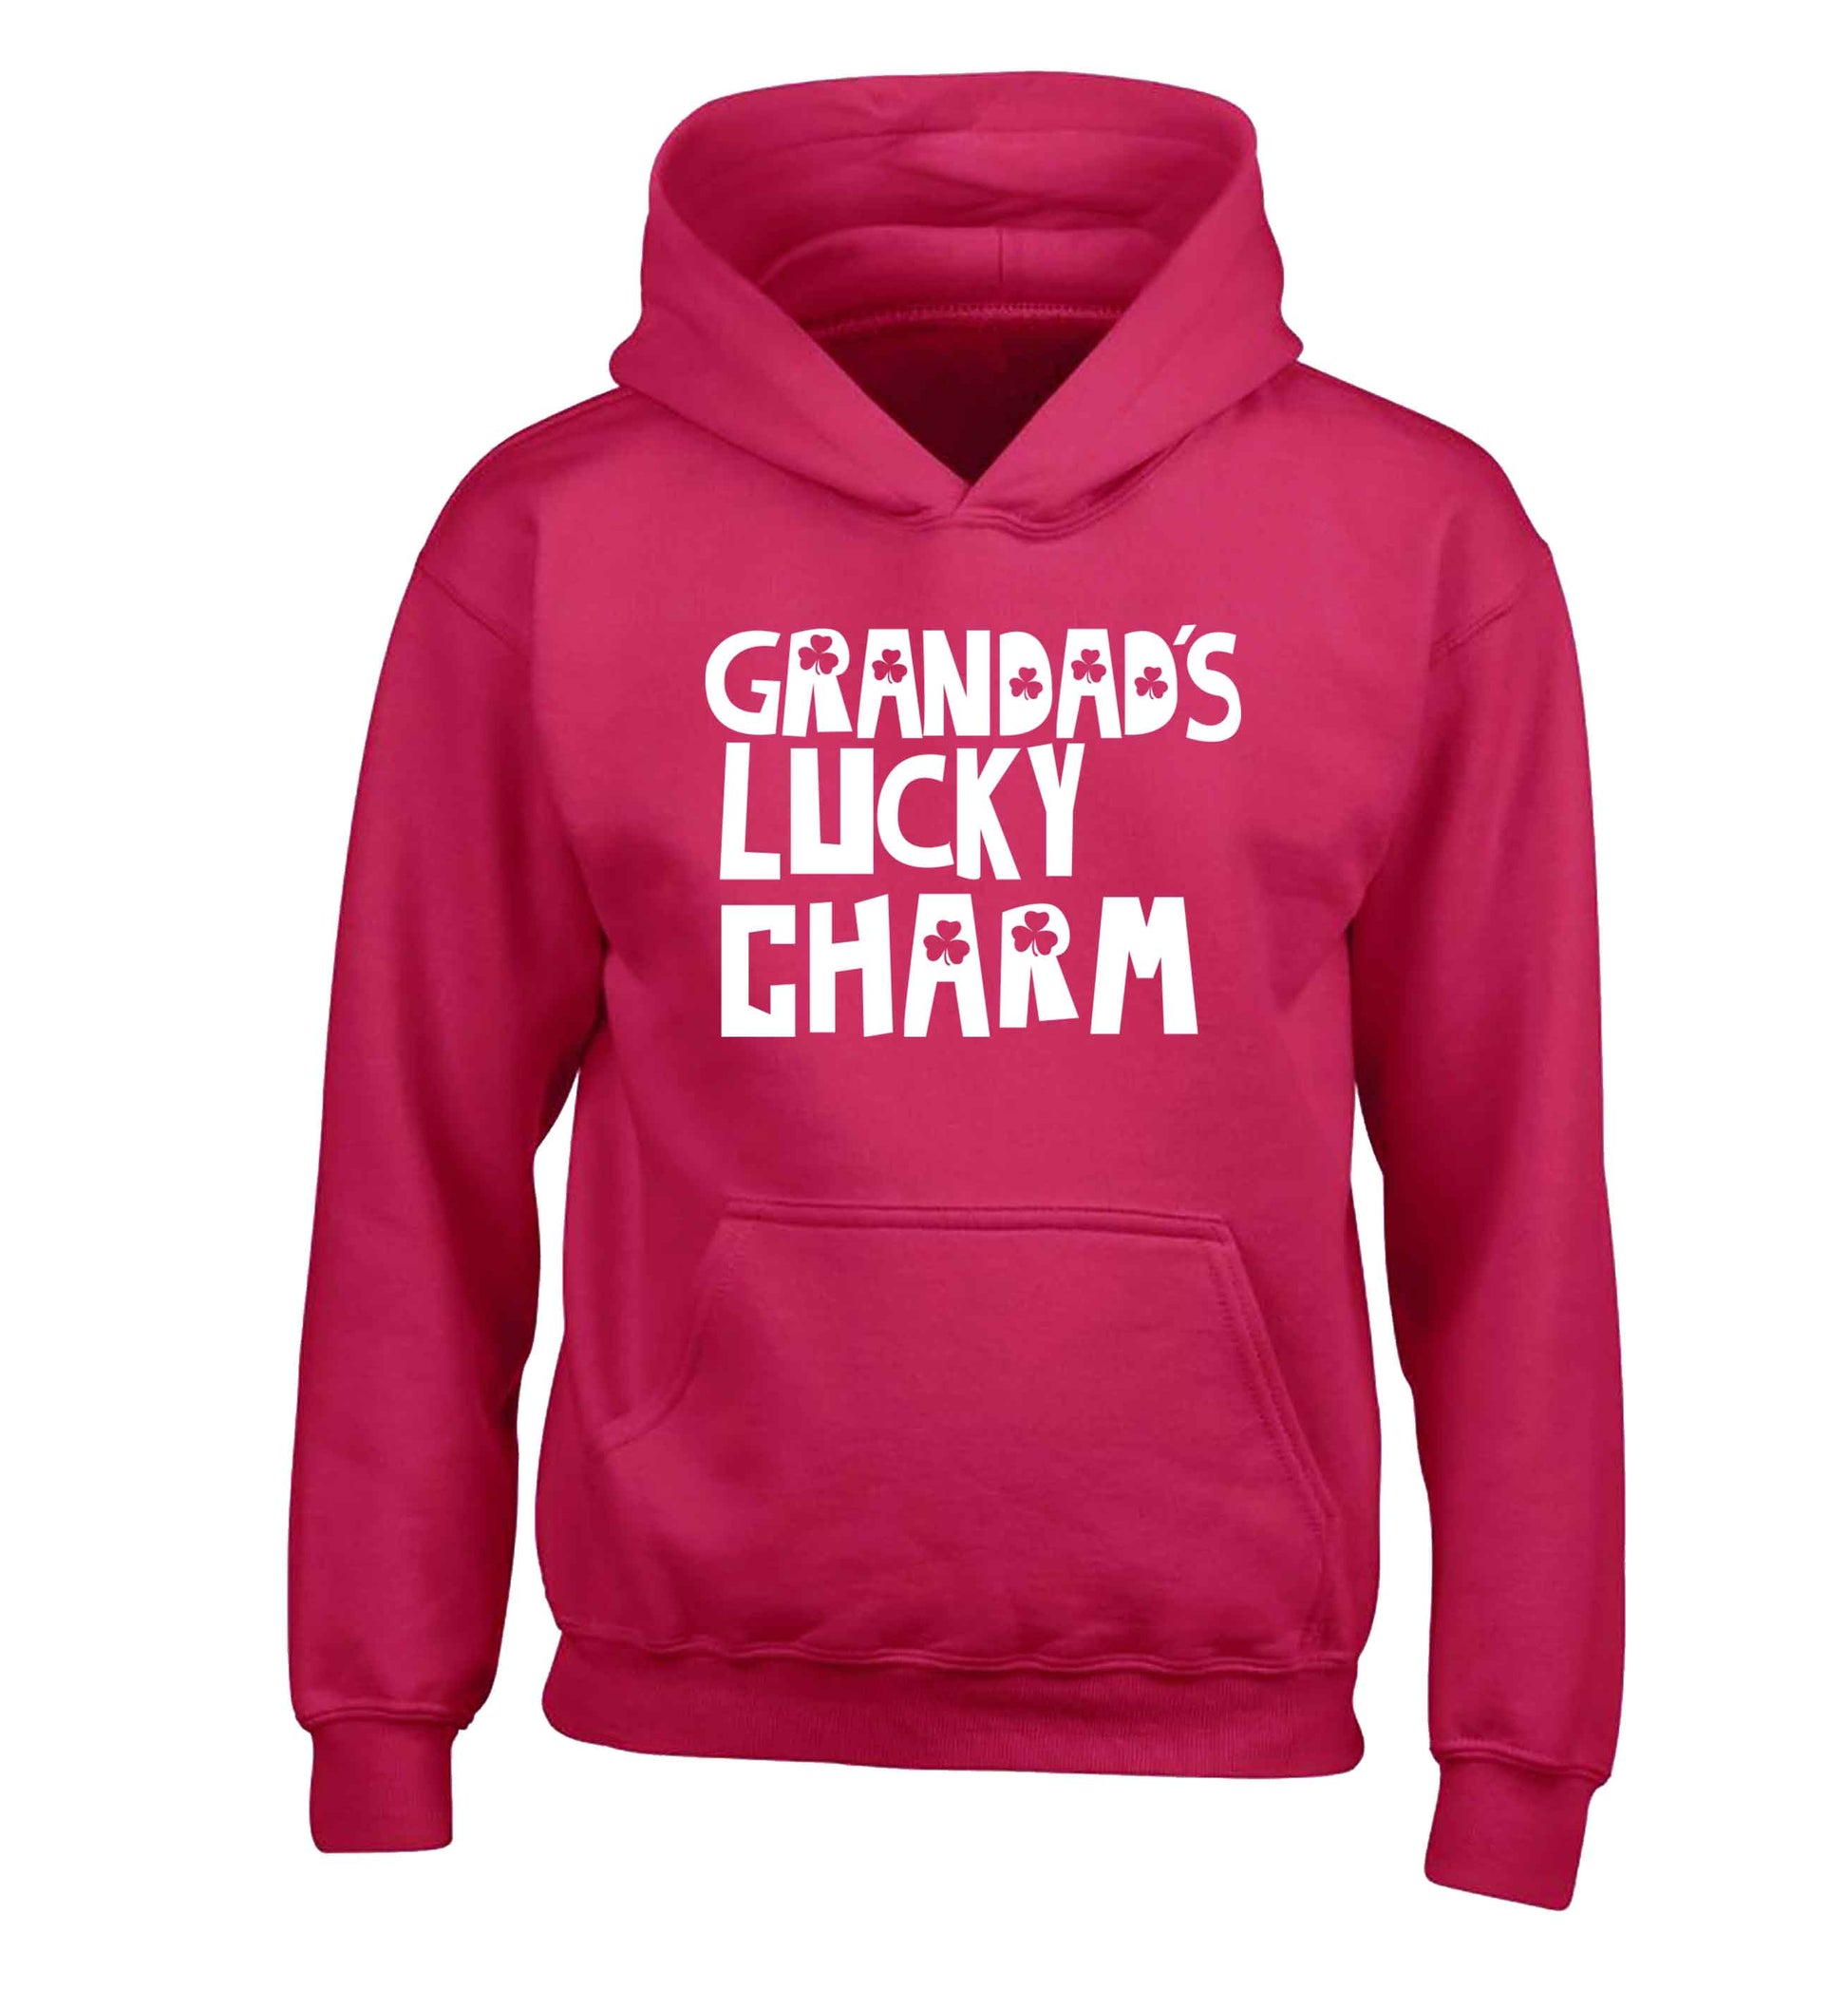 Grandad's lucky charm  children's pink hoodie 12-13 Years